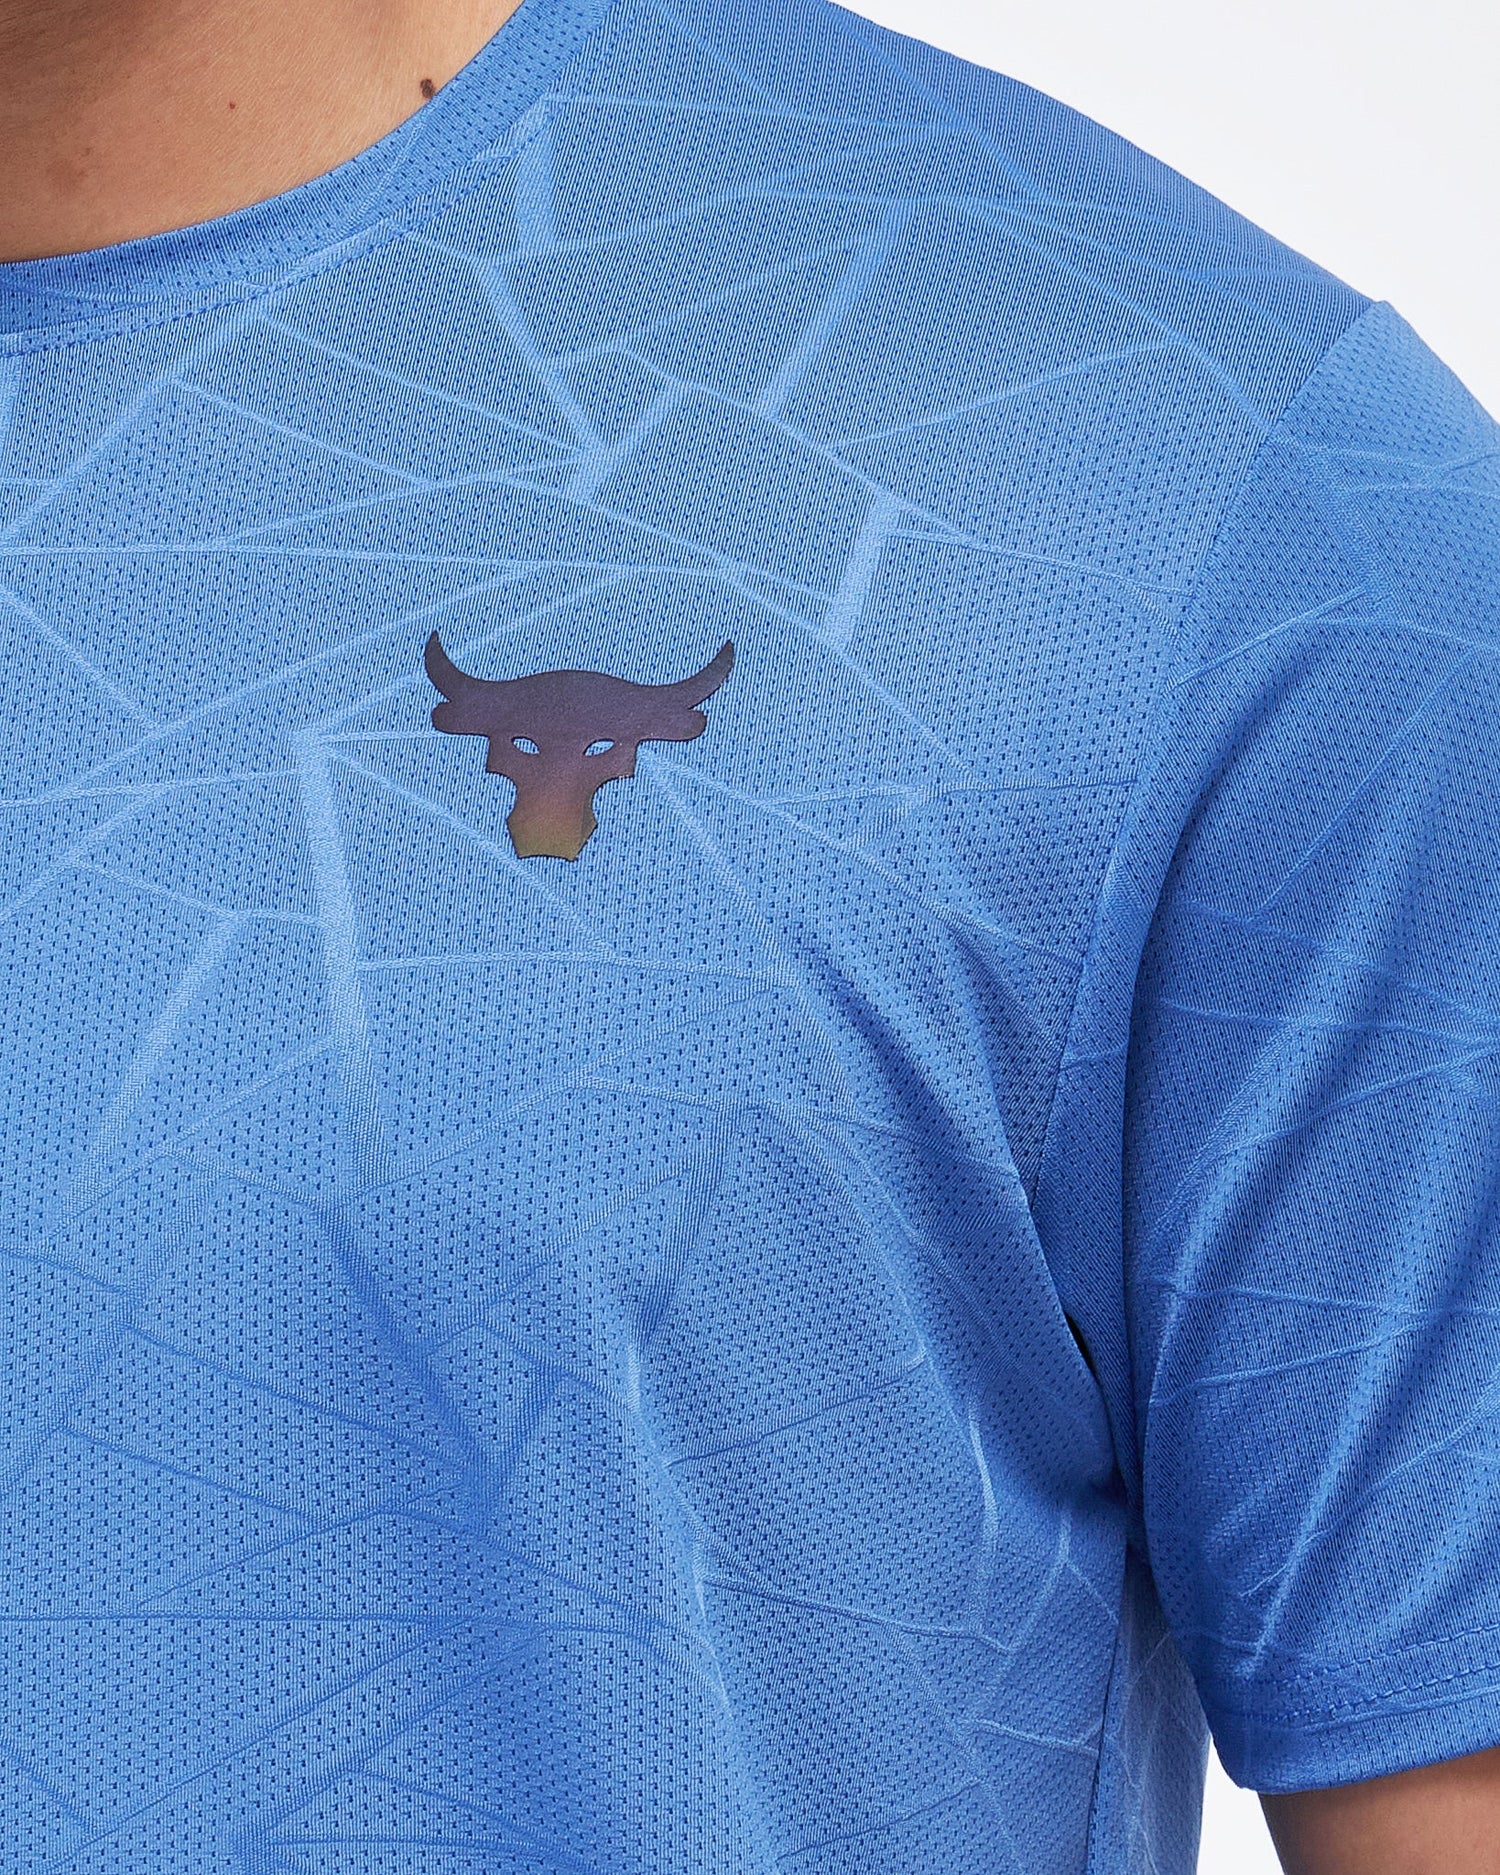 MOI OUTFIT-Buffalo Head Printed Sport Men T-Shirt 12.90